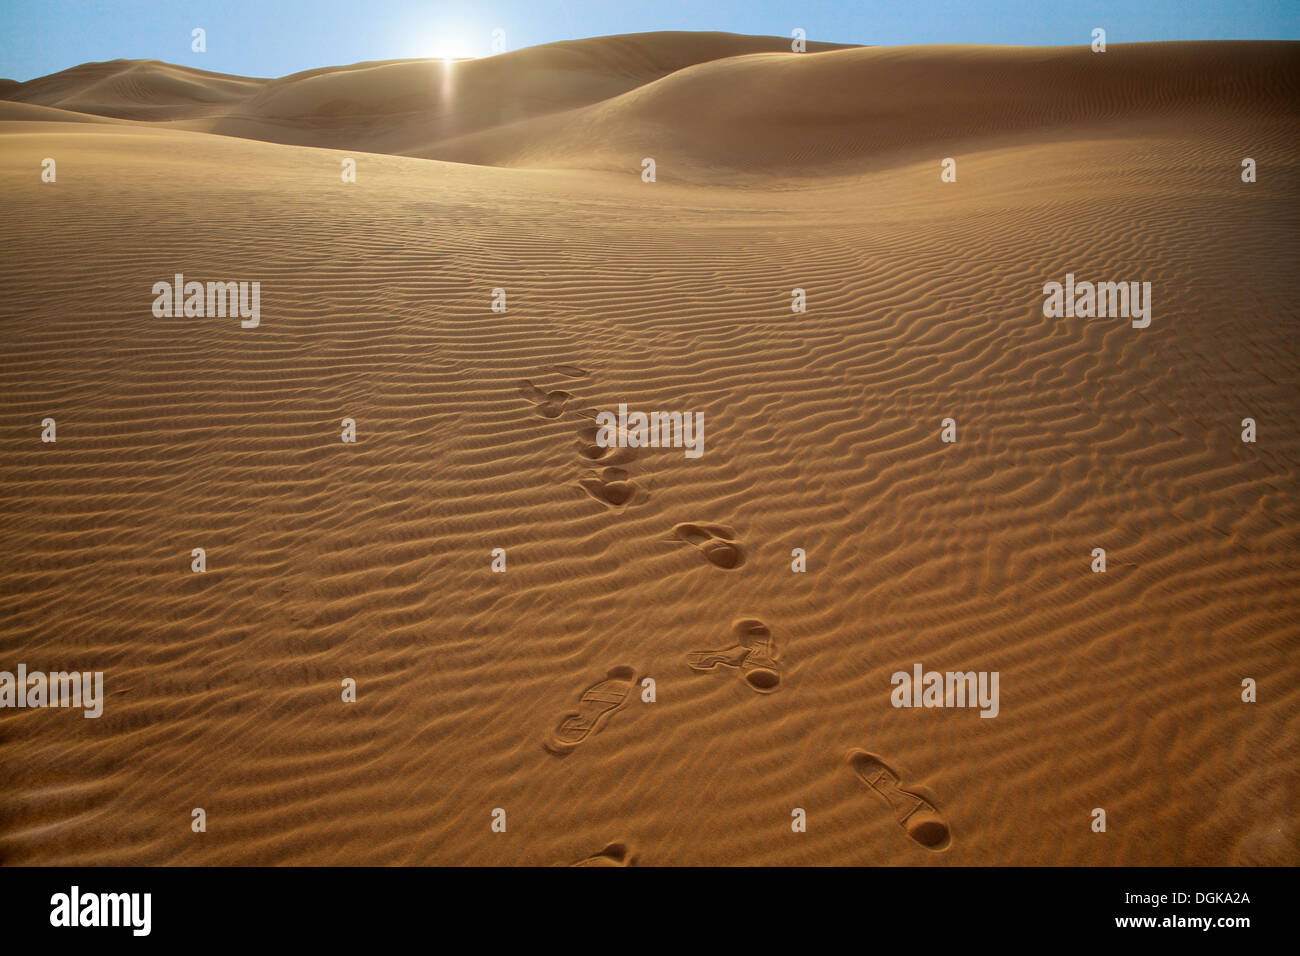 Footsteps in the sand of the Dubai desert. Stock Photo